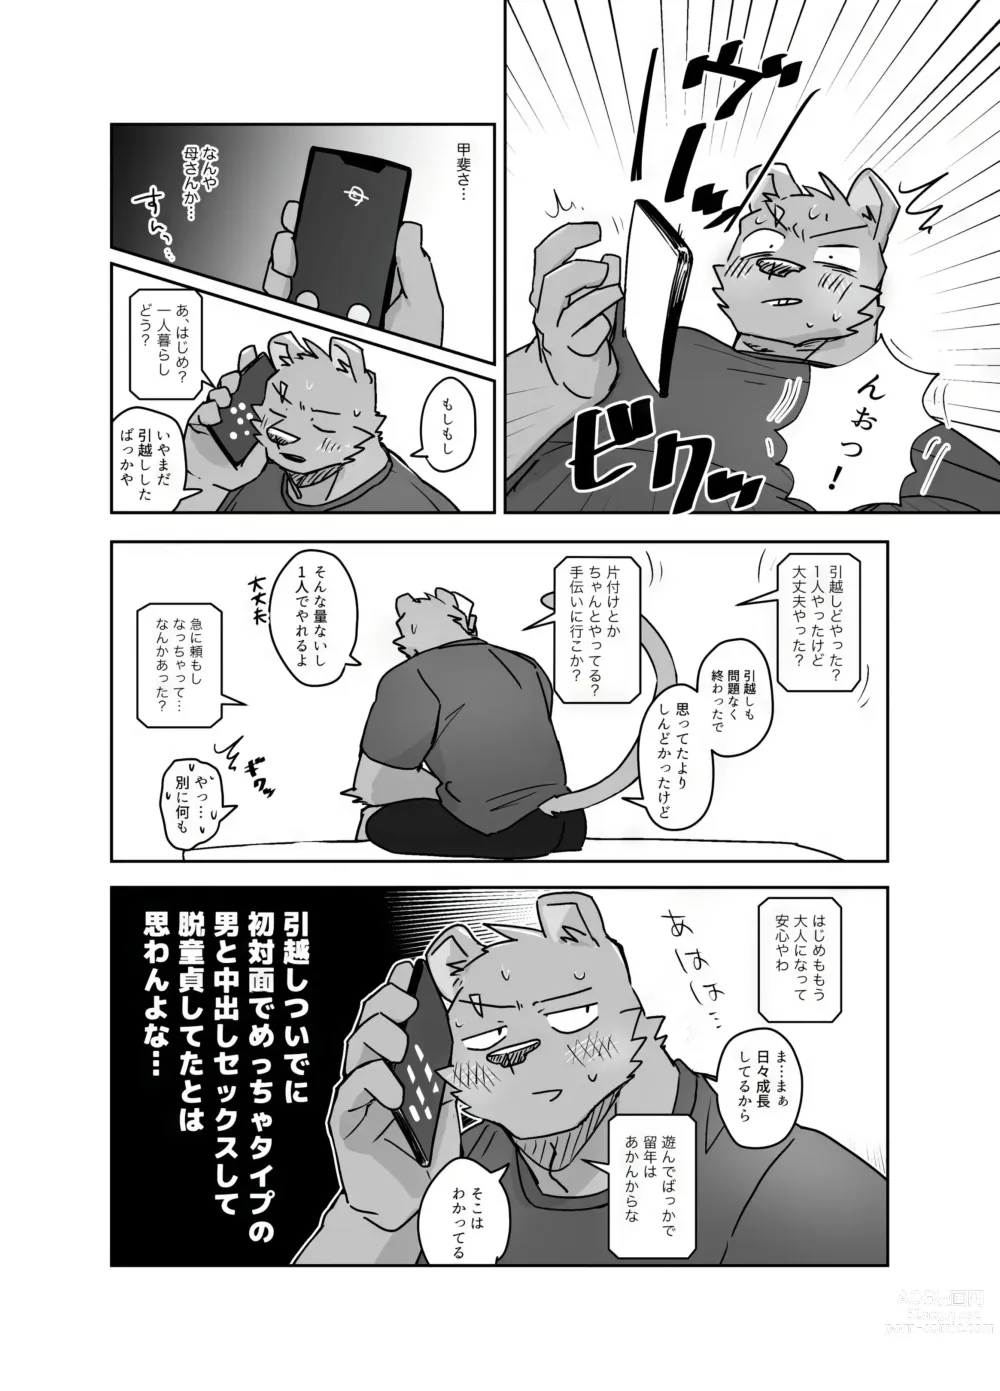 Page 6 of manga 【おまけ漫画】その日の夜